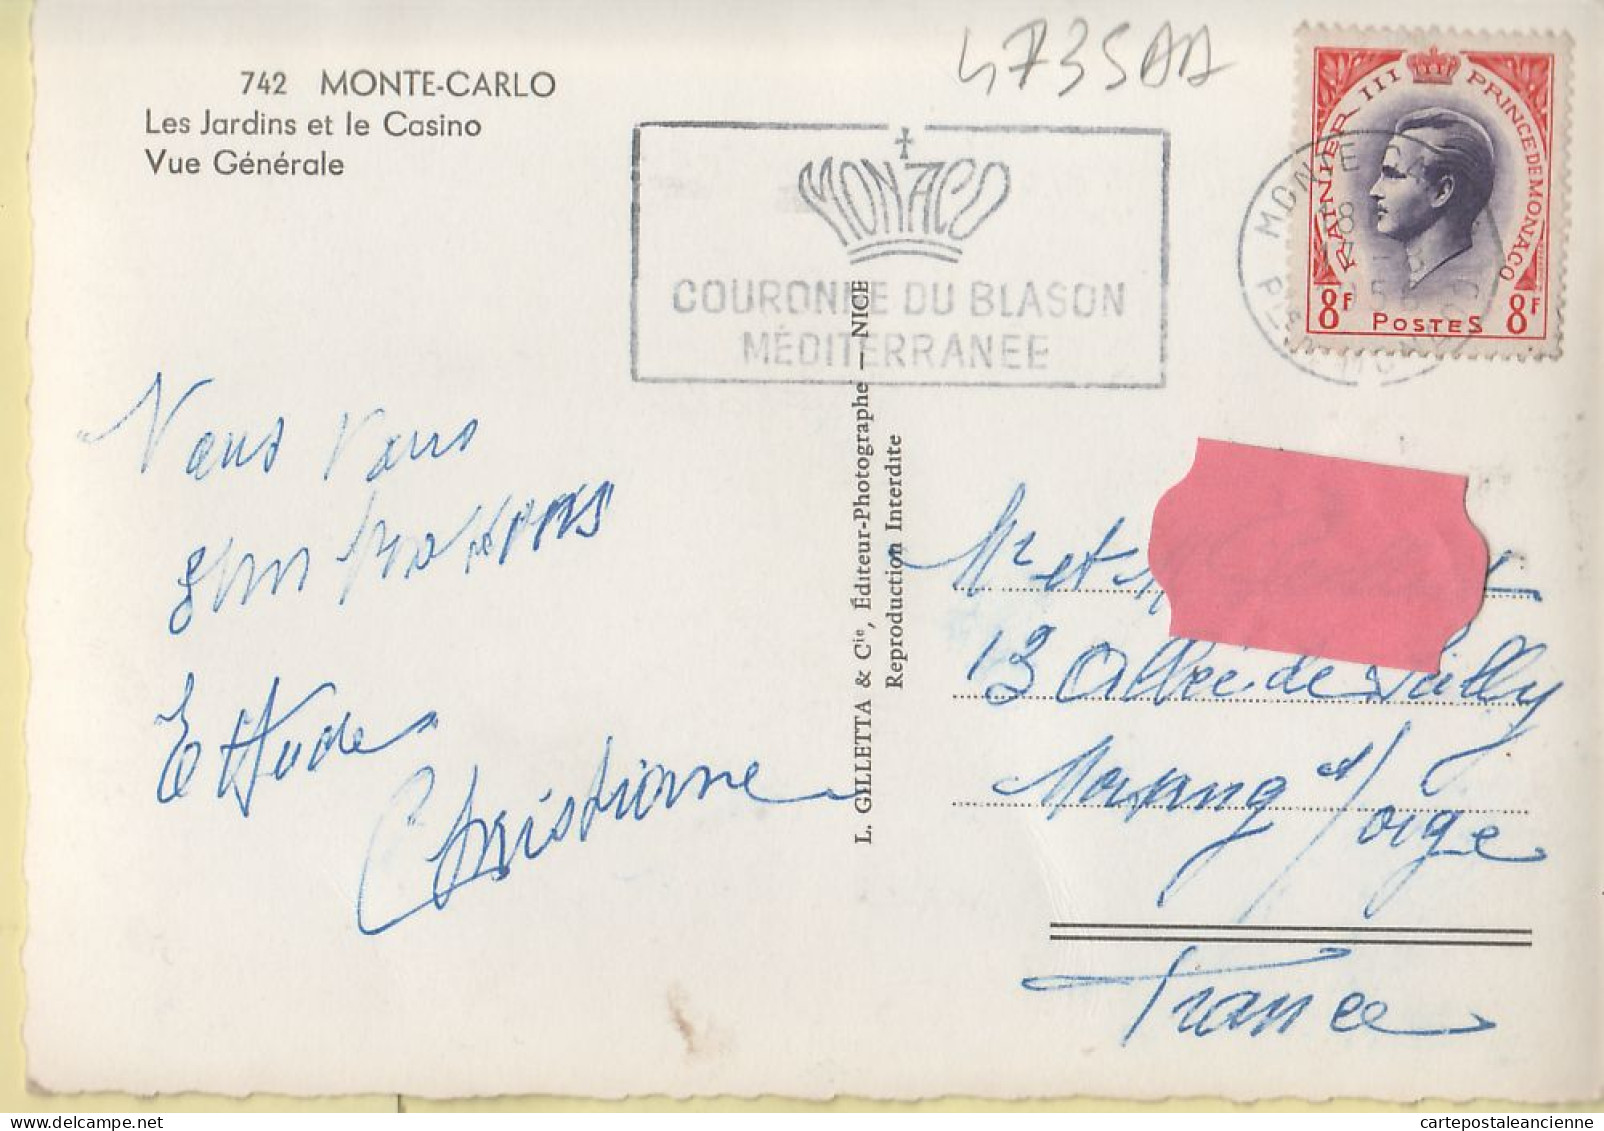 00833 ● Monaco MONTE-CARLO Les Jardins Casino Vue Générale Flamme COURONNE BLASON MEDITERRANEE 17.08.1956 -GILETTA 742 - Viste Panoramiche, Panorama